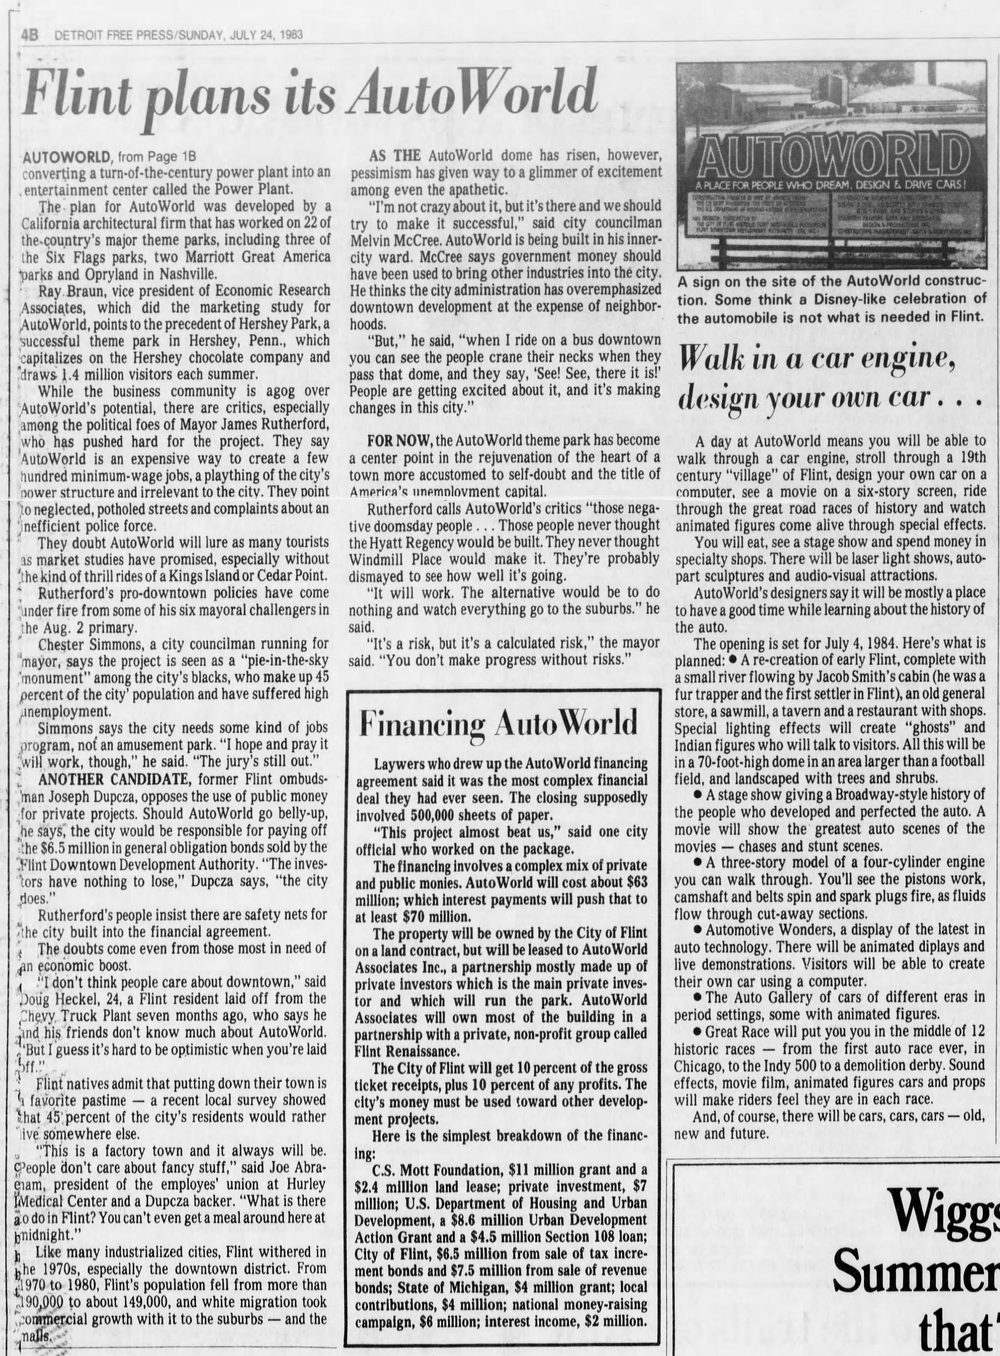 AutoWorld (Six Flags AutoWorld) - JULY 1983 ARTICLE FREE PRESS